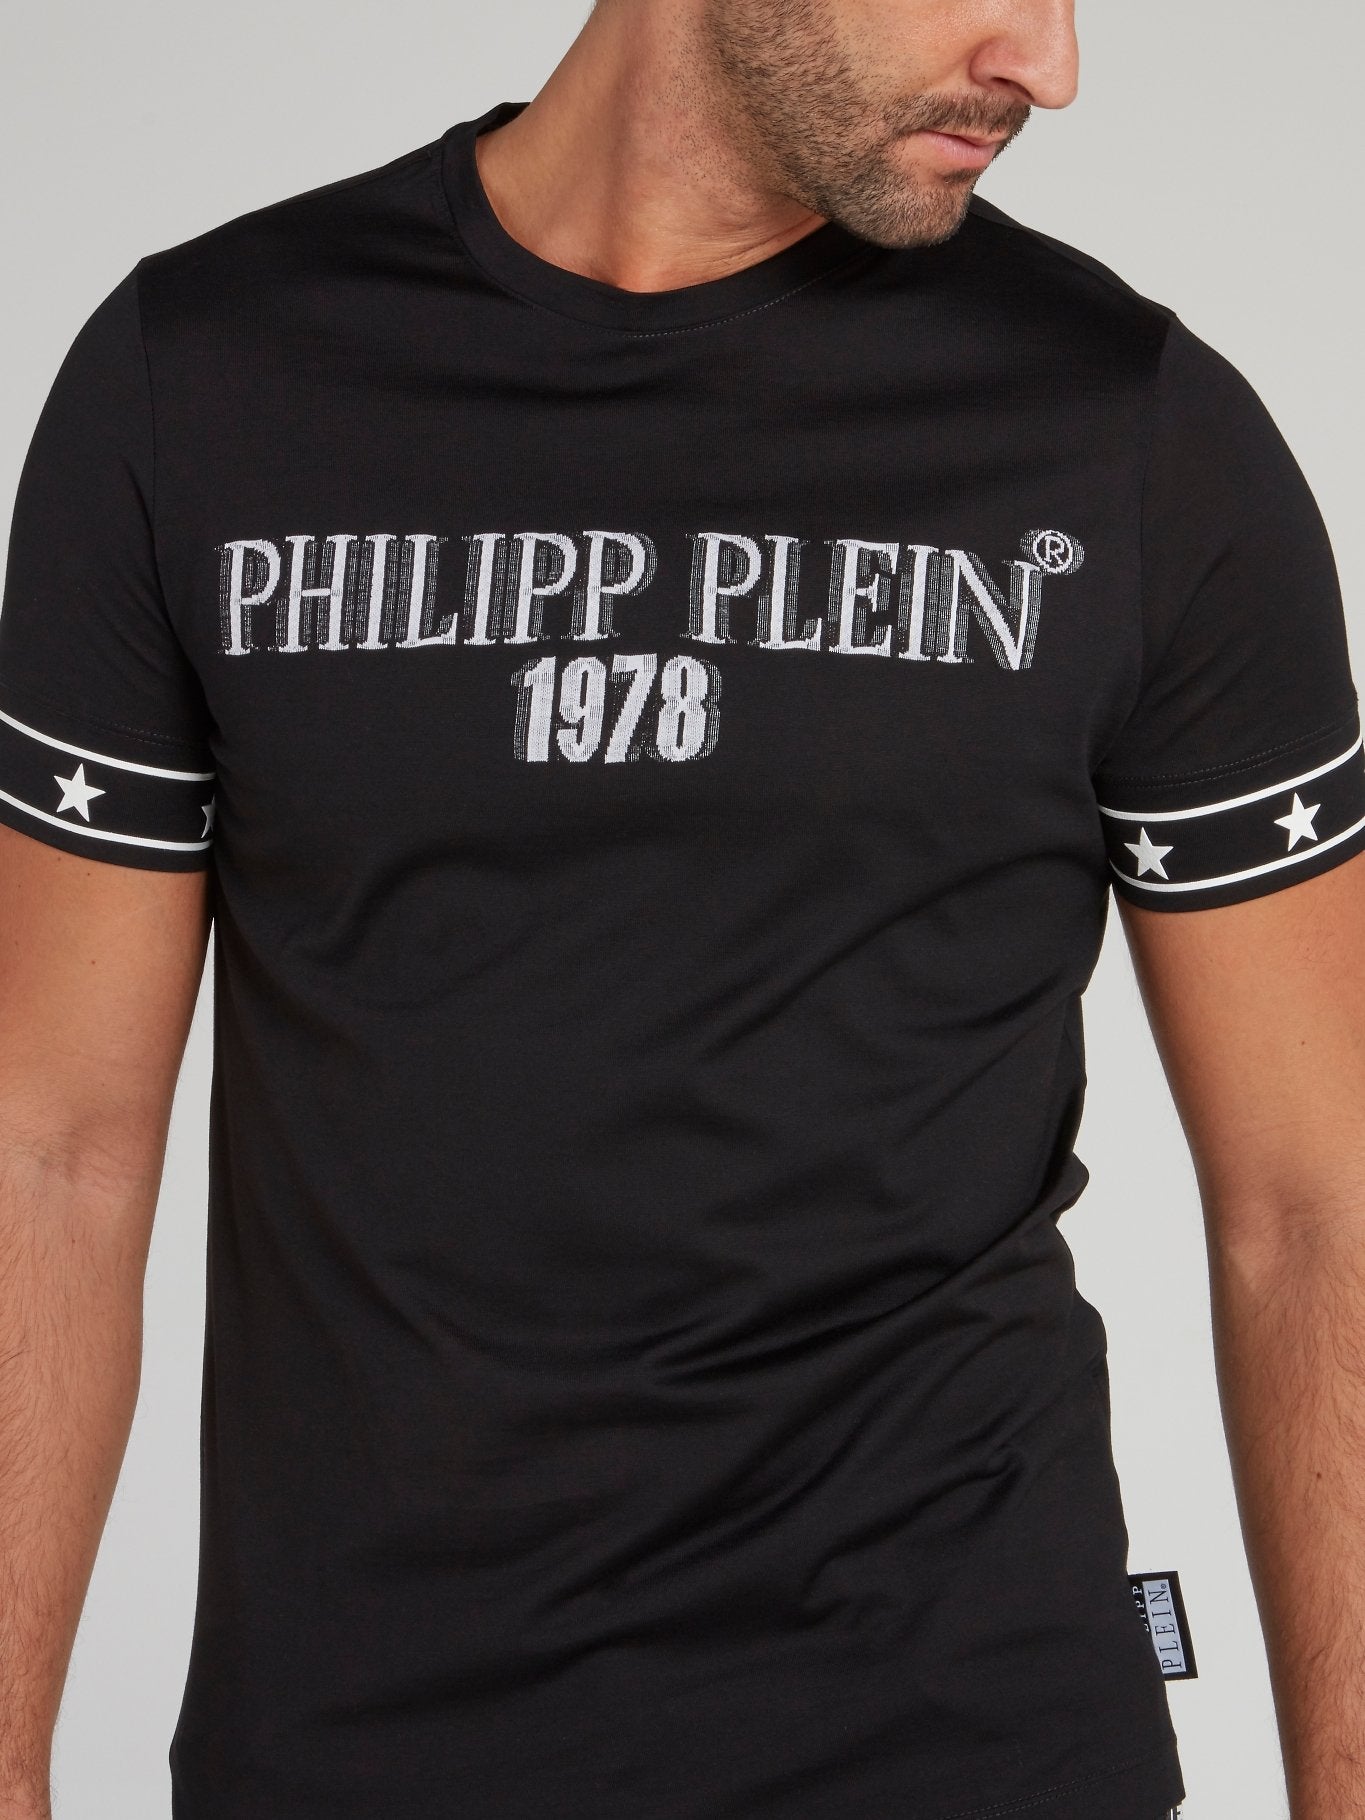 PP1978 Black Star Sleeve T-Shirt